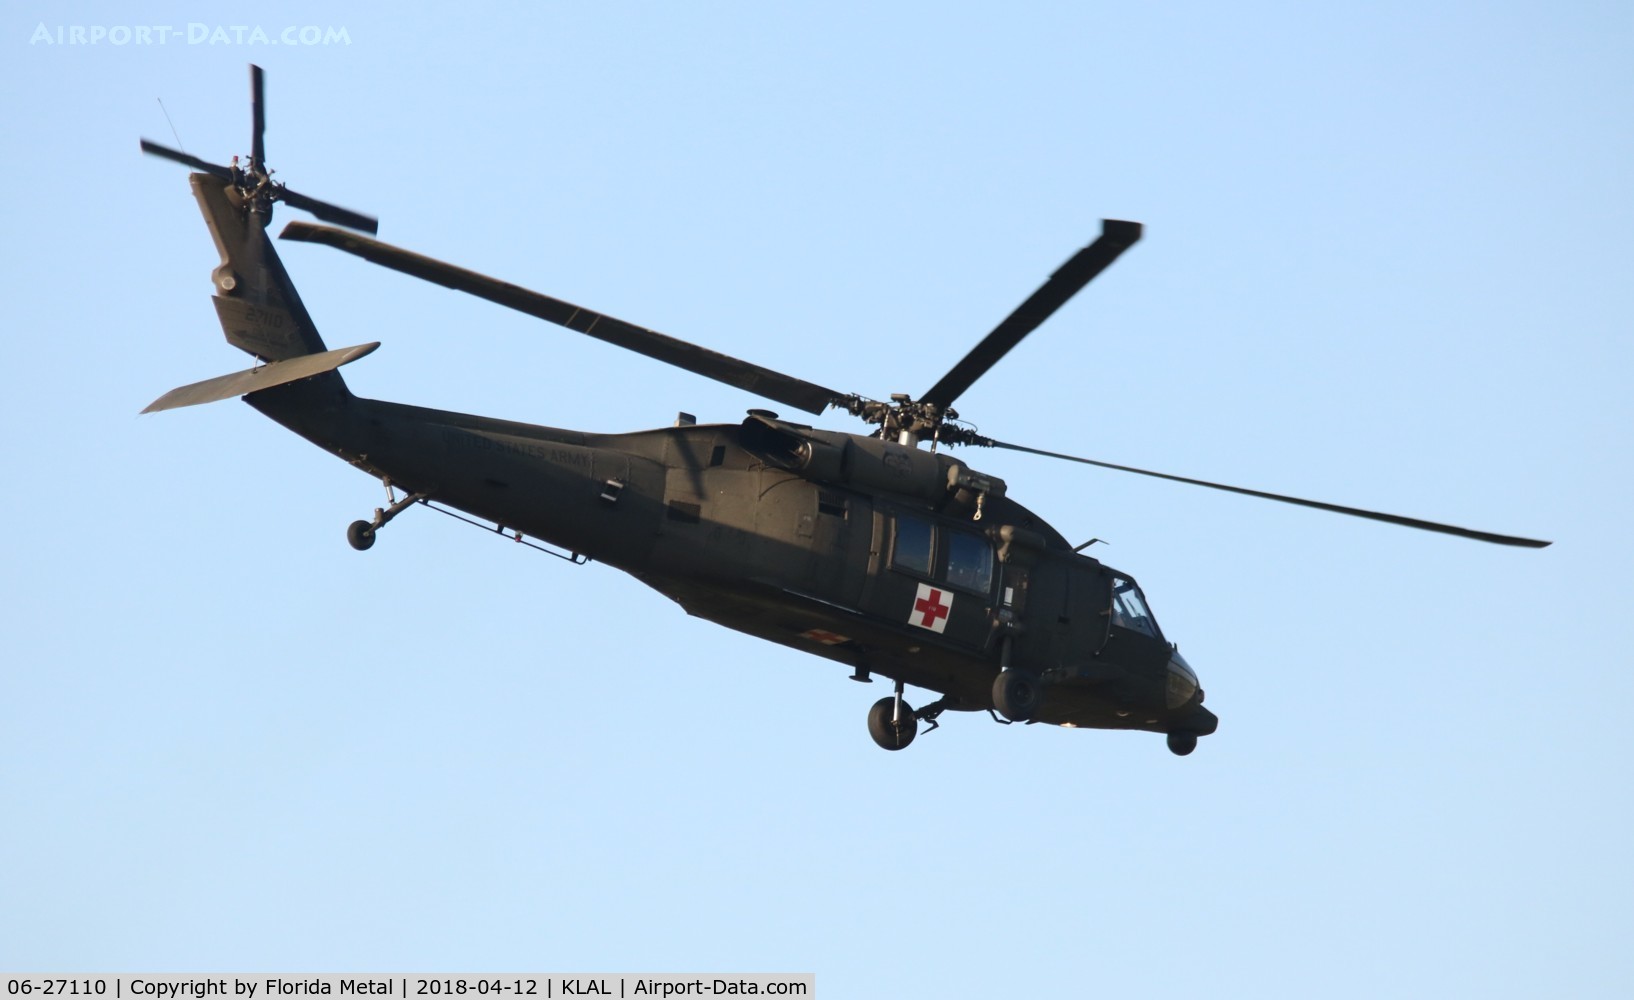 06-27110, 2006 Sikorsky HH-60L Pave Hawk C/N 703007, US Army HH-60 Pave Hawk